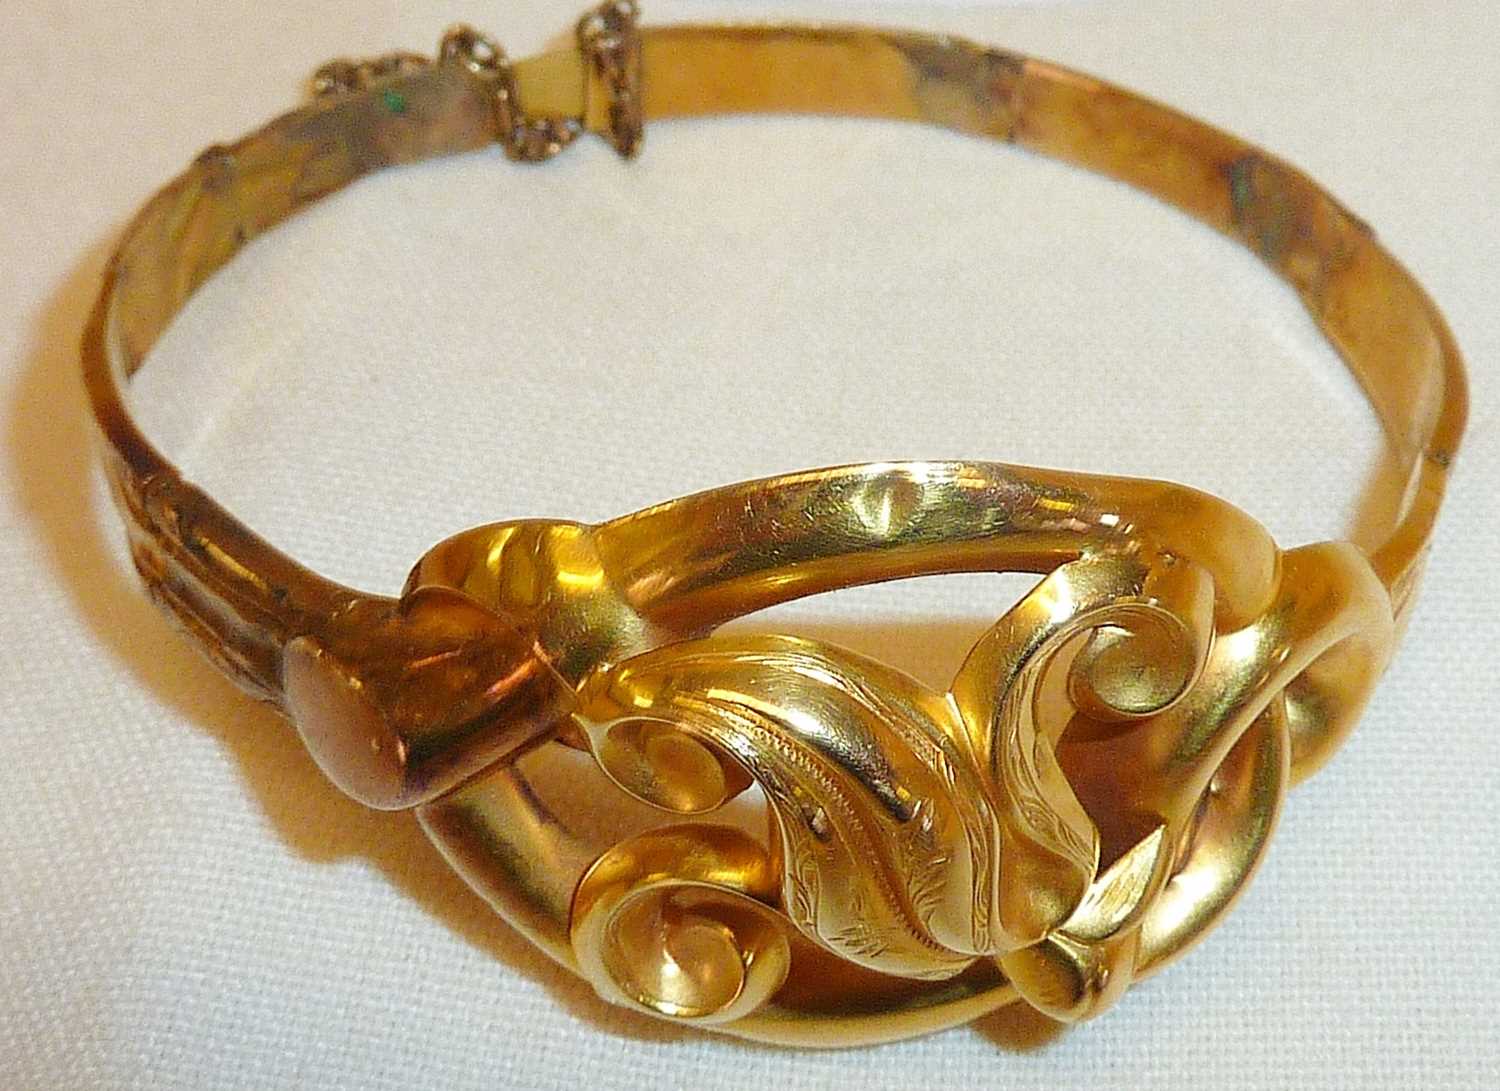 French 18ct gold Belle Epoque Art Nouveau style 19th c. bracelet, some repairs, has eagle's head - Image 3 of 4